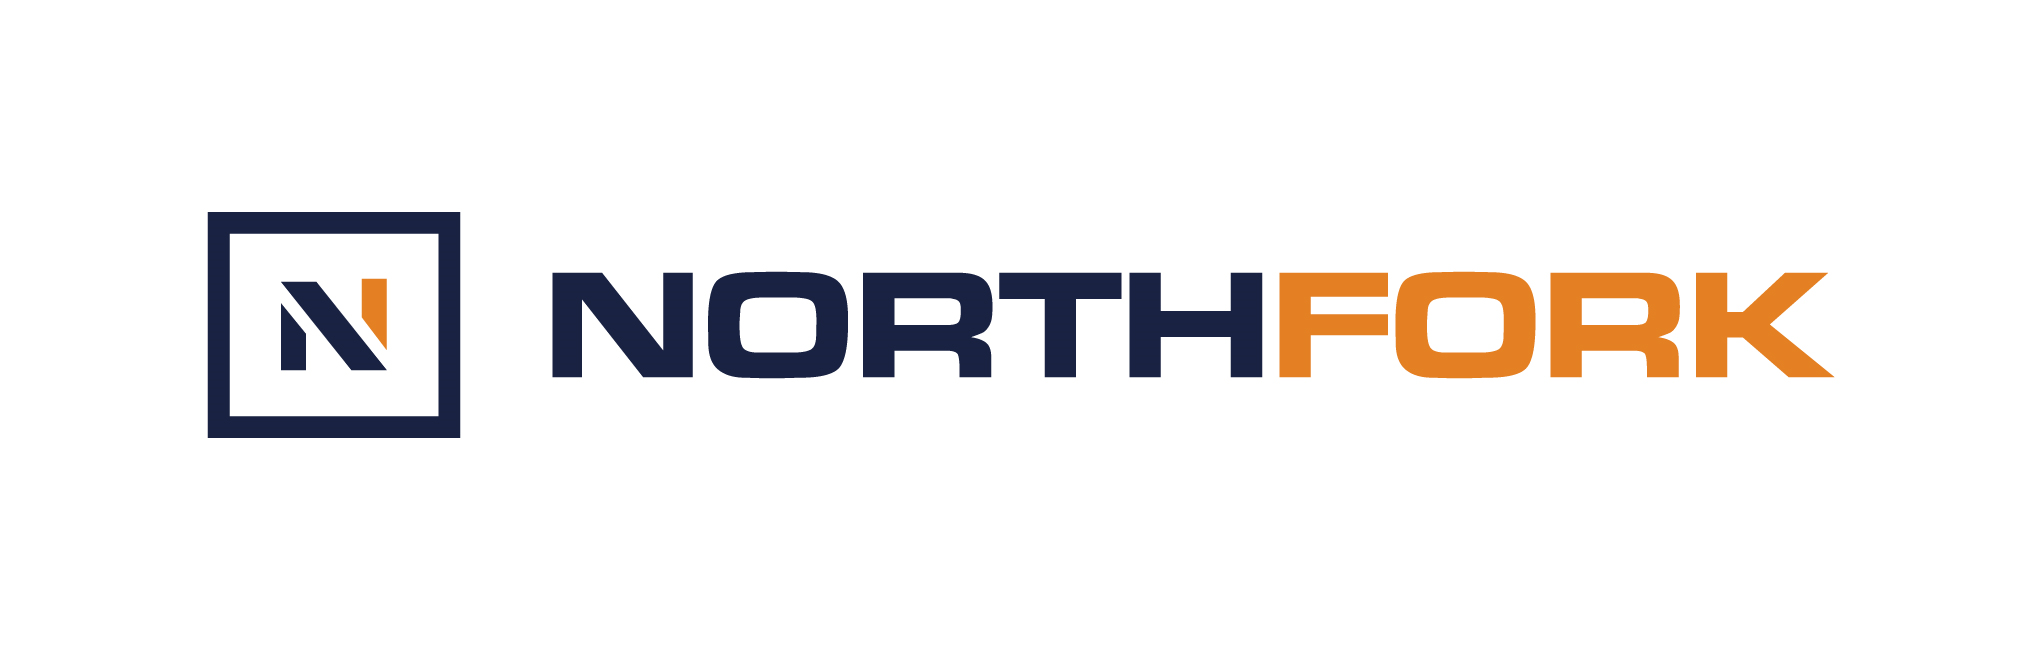 North Fork Builders Company Logo